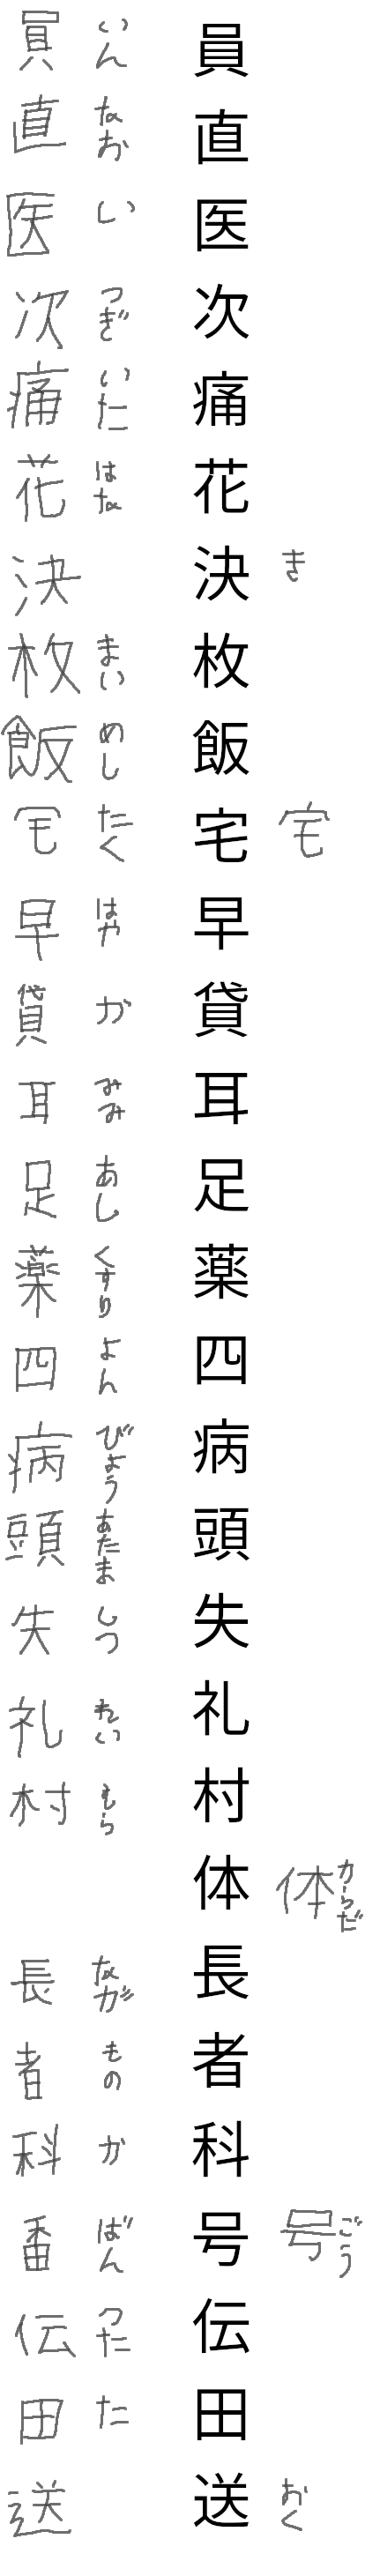 kanji test row 15